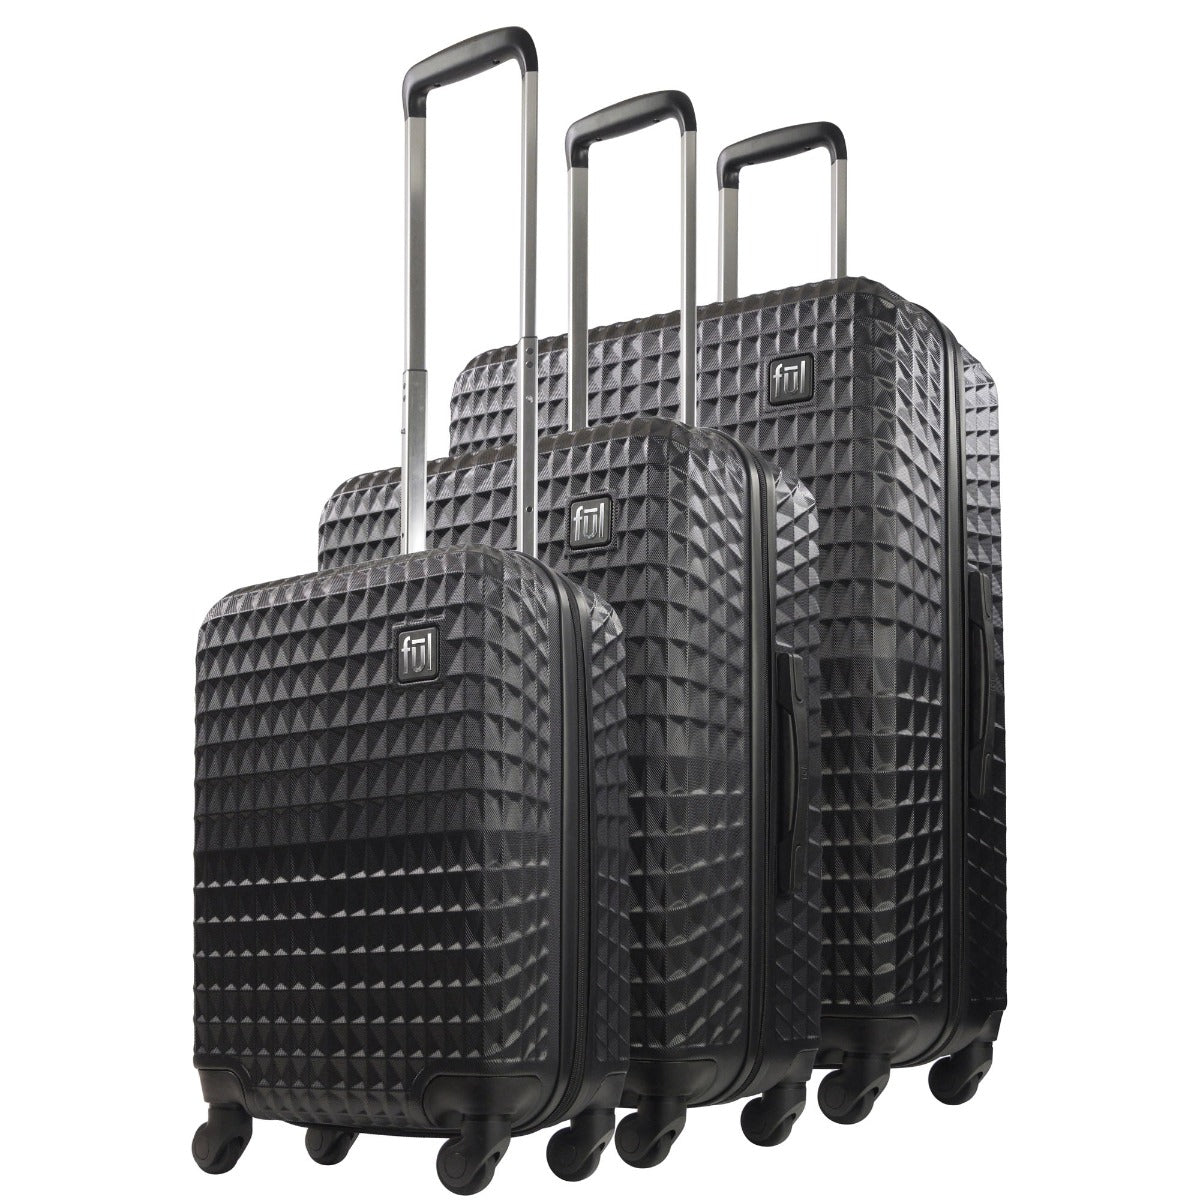 Ful Geo hard sided spinner suitcase hard sided 3 piece luggage set black